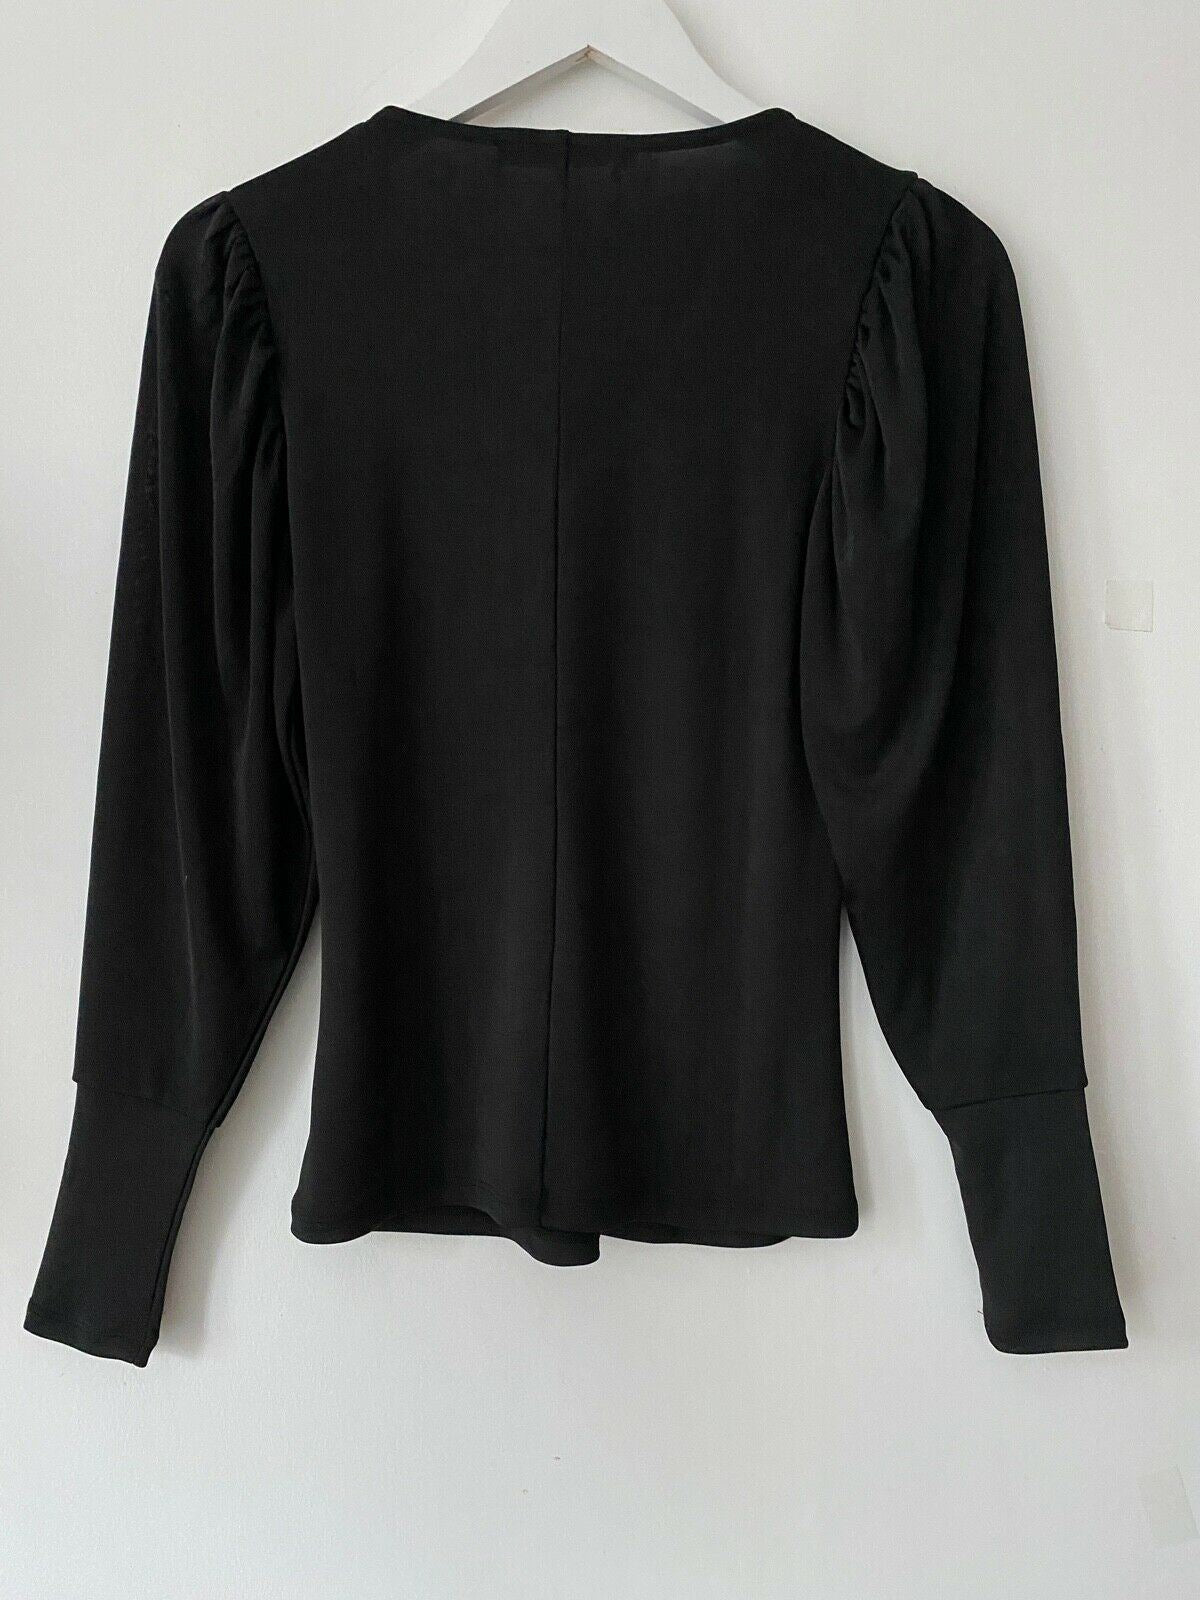 Very Blouson Sleeve Black Top Size 8